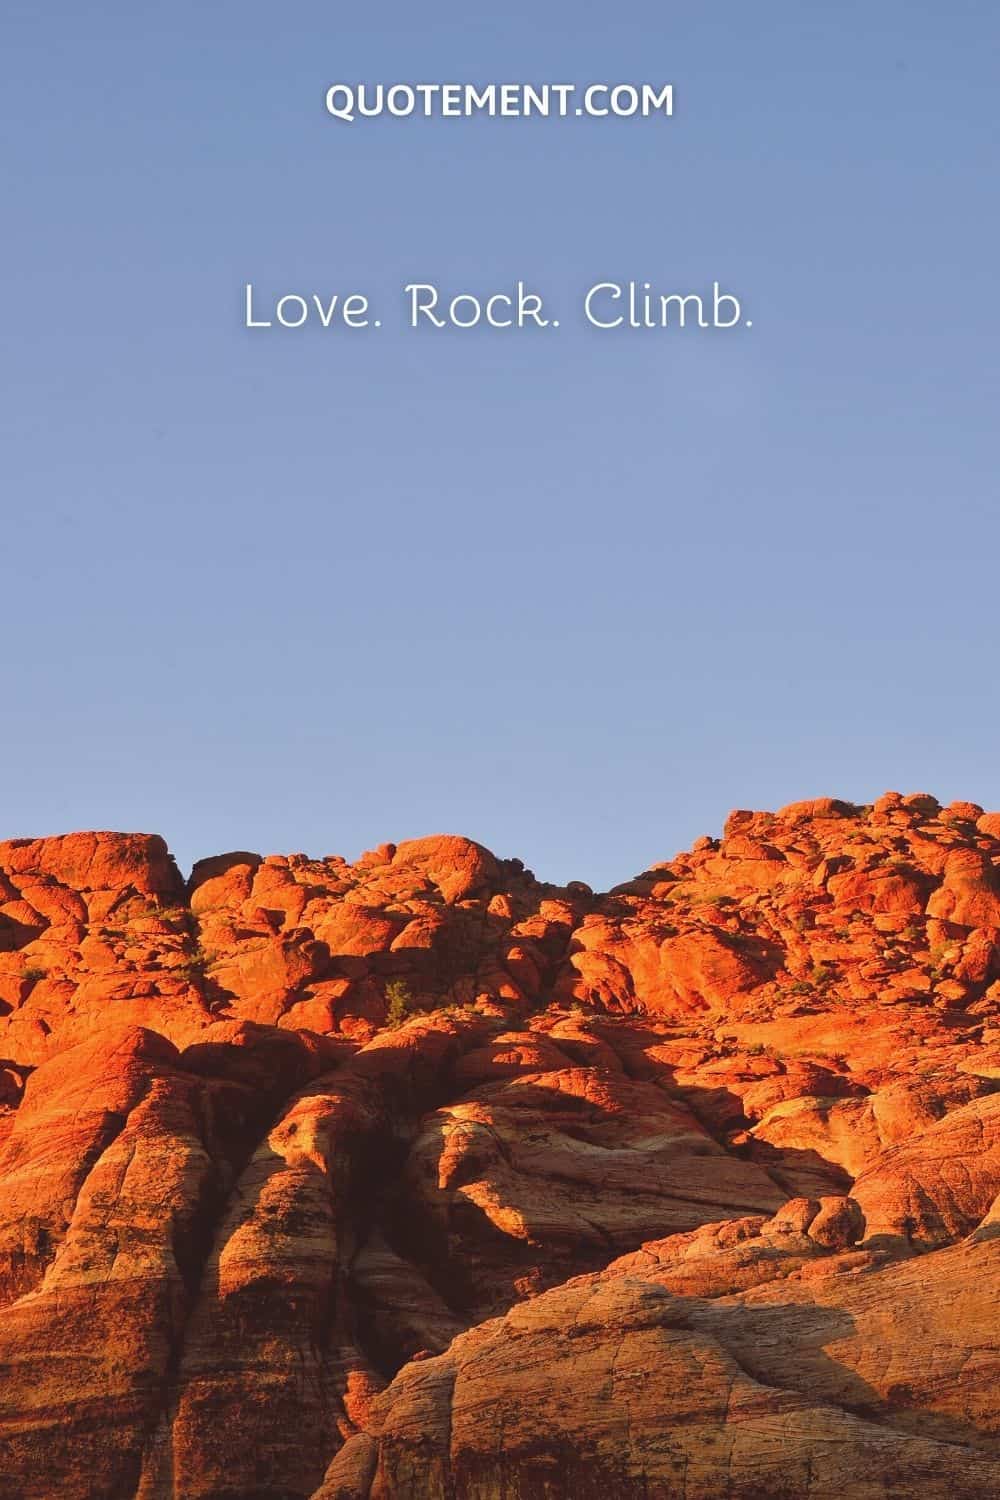 Love. Rock. Climb.